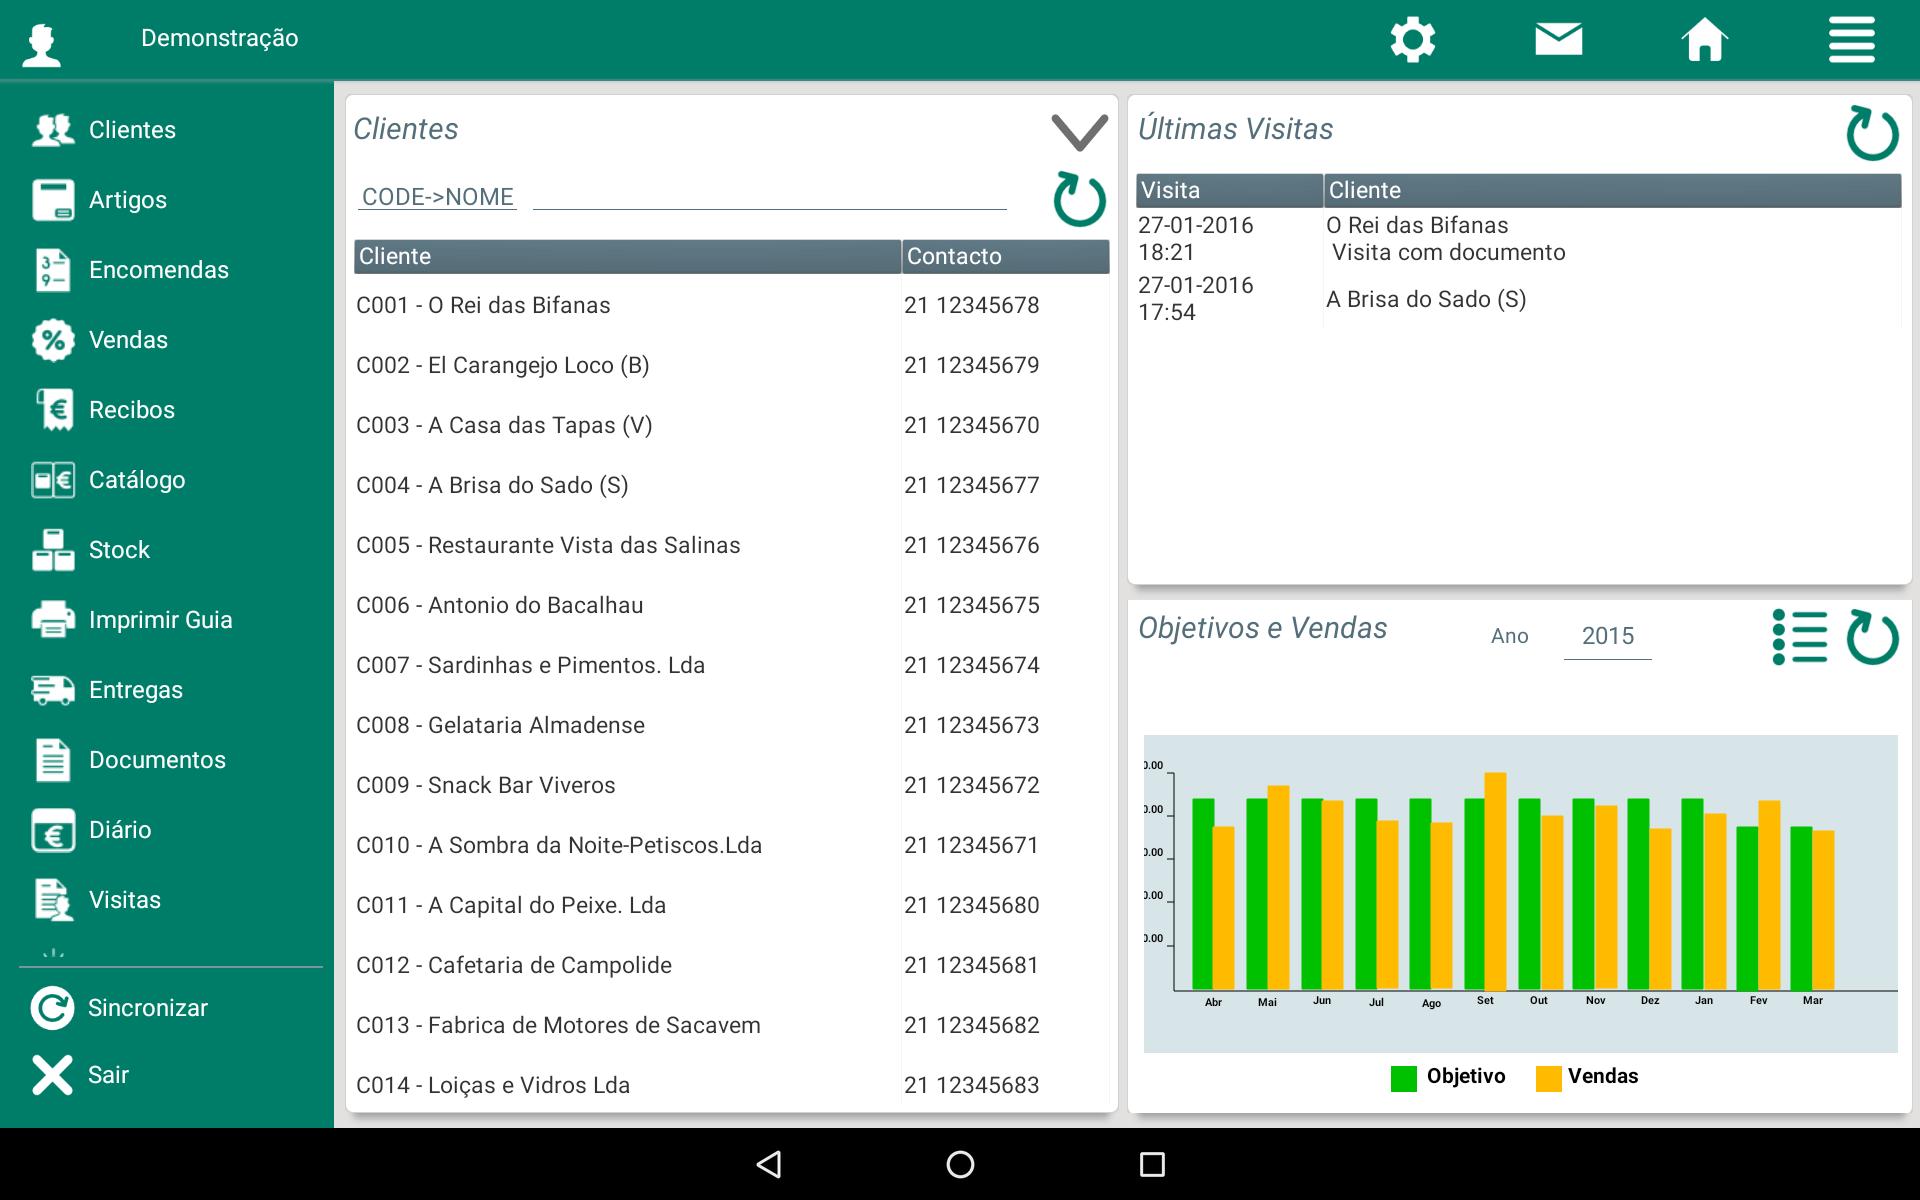 Mobile Sales System Old V4 5 For Android Apk Download - old roblox 2015 download mobile